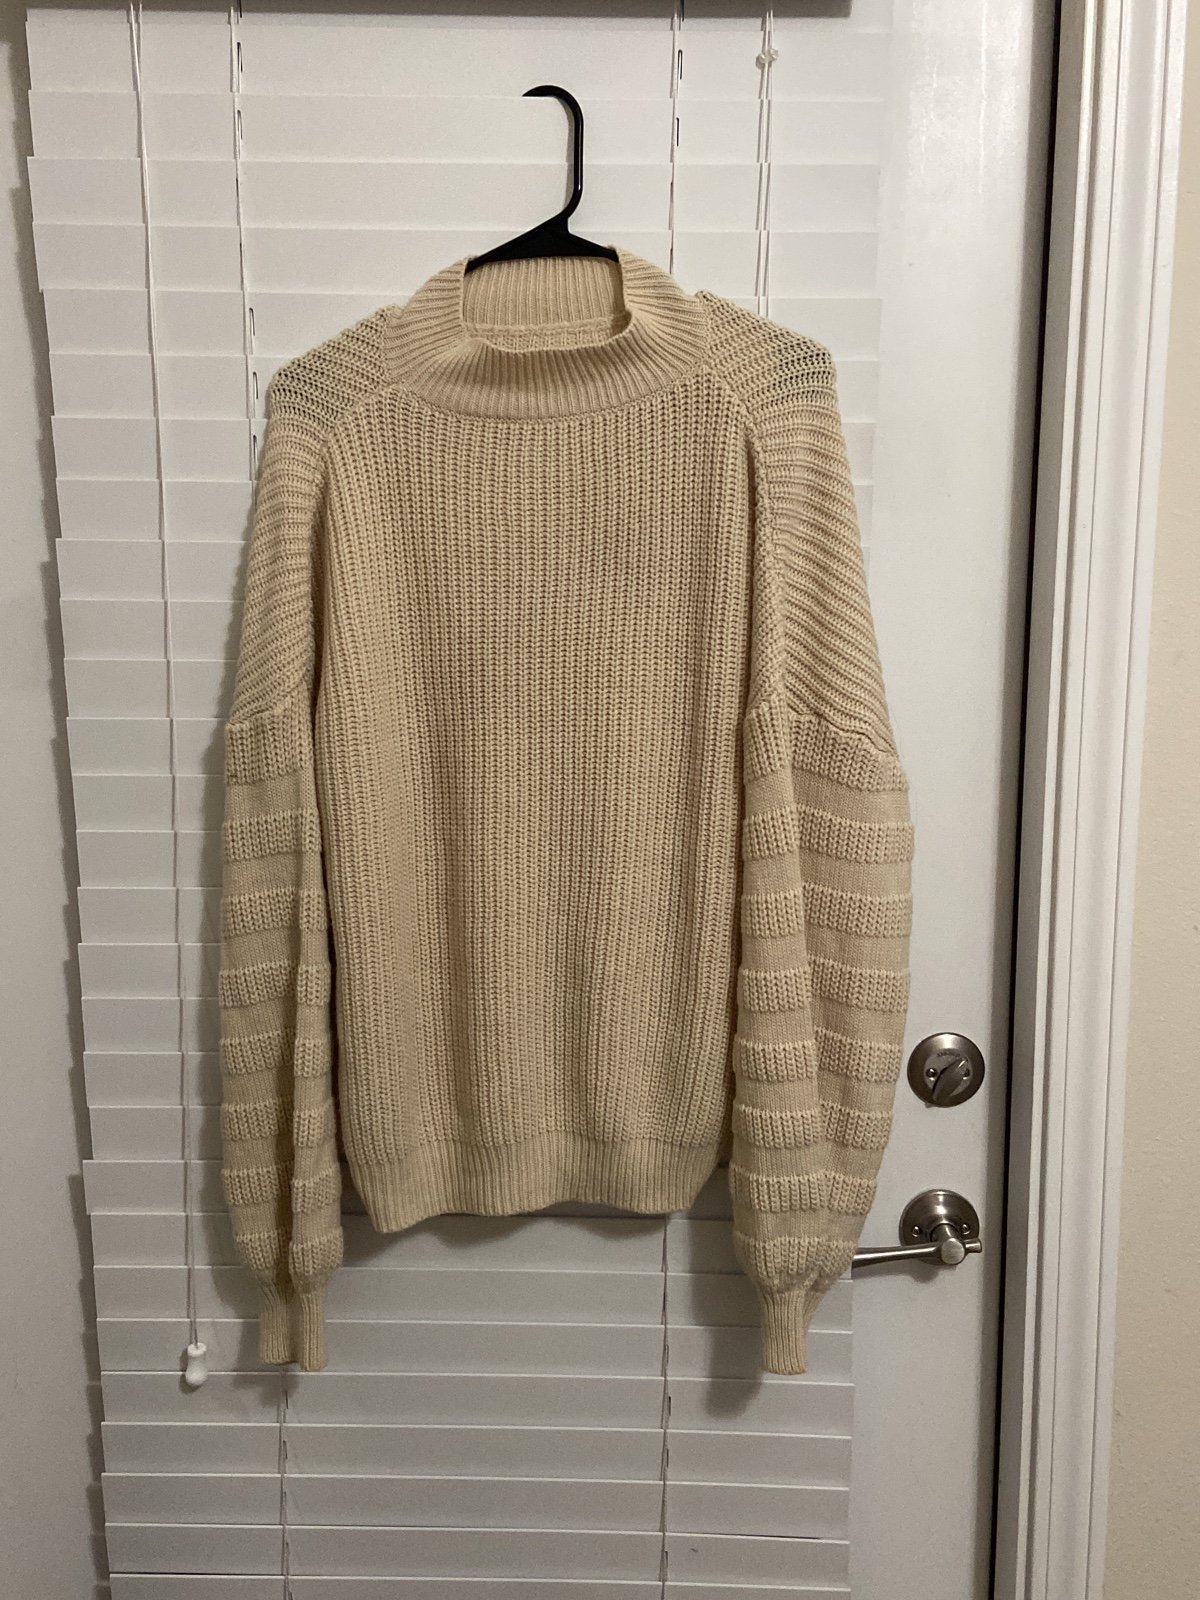 large discount Sweater KVep6HaLt Wholesale